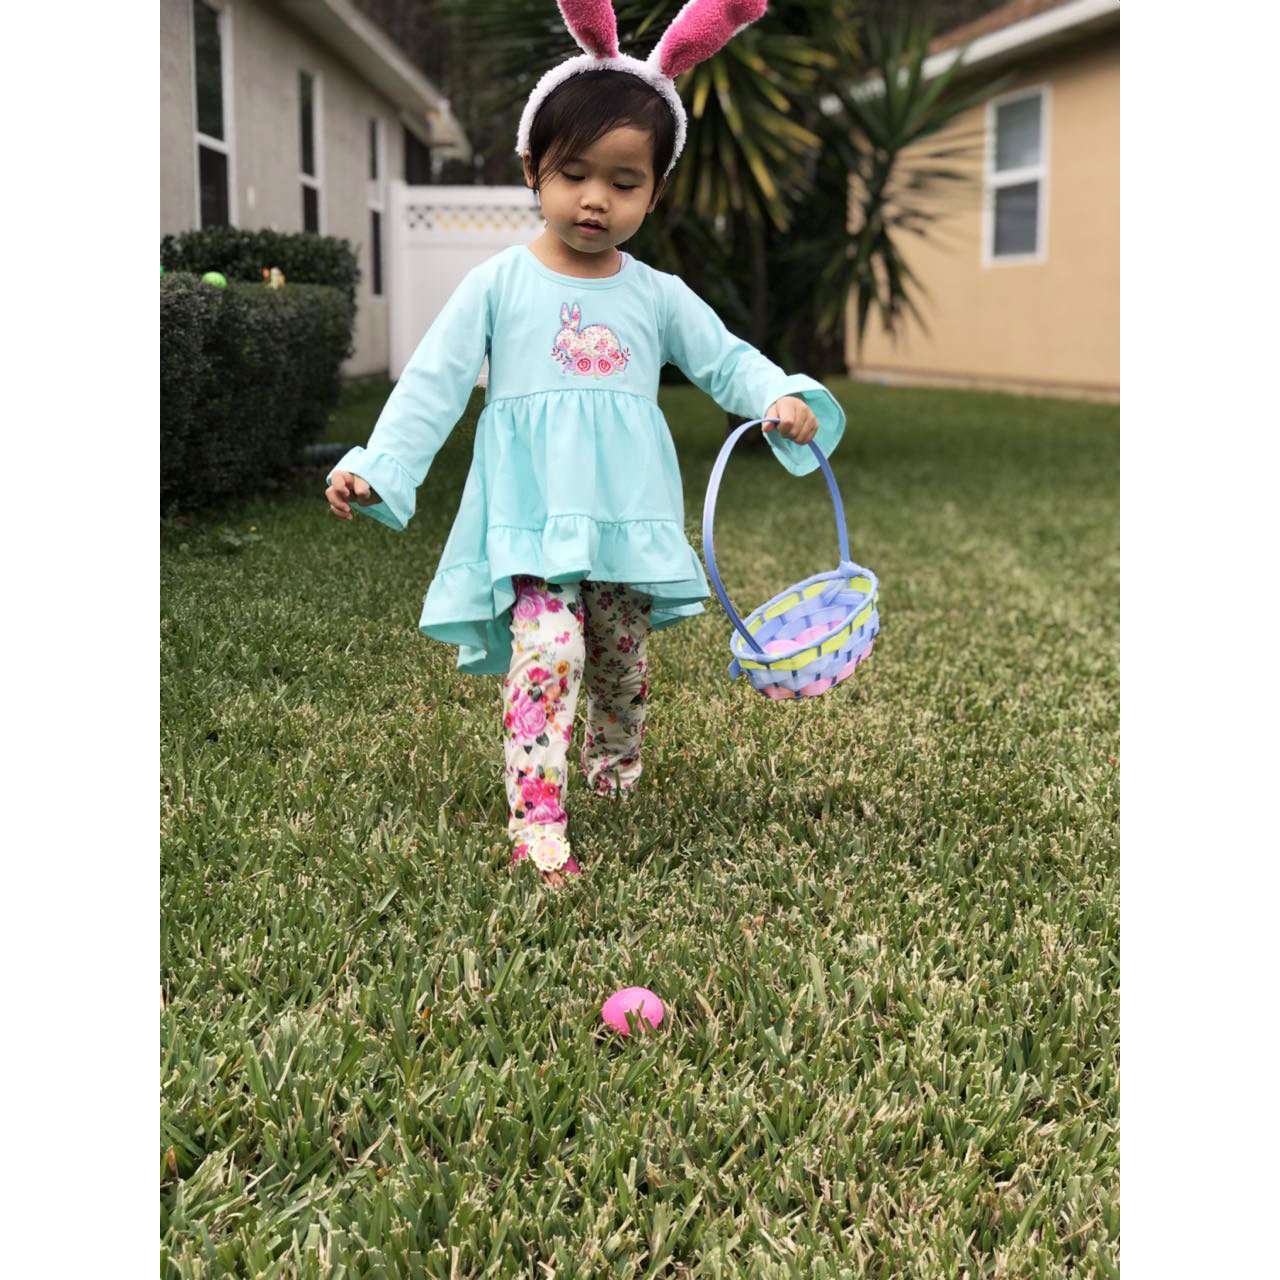 Angeline Kids:Baby Toddler Girls Easter Bunny Hi-Low Tunic Legging Set